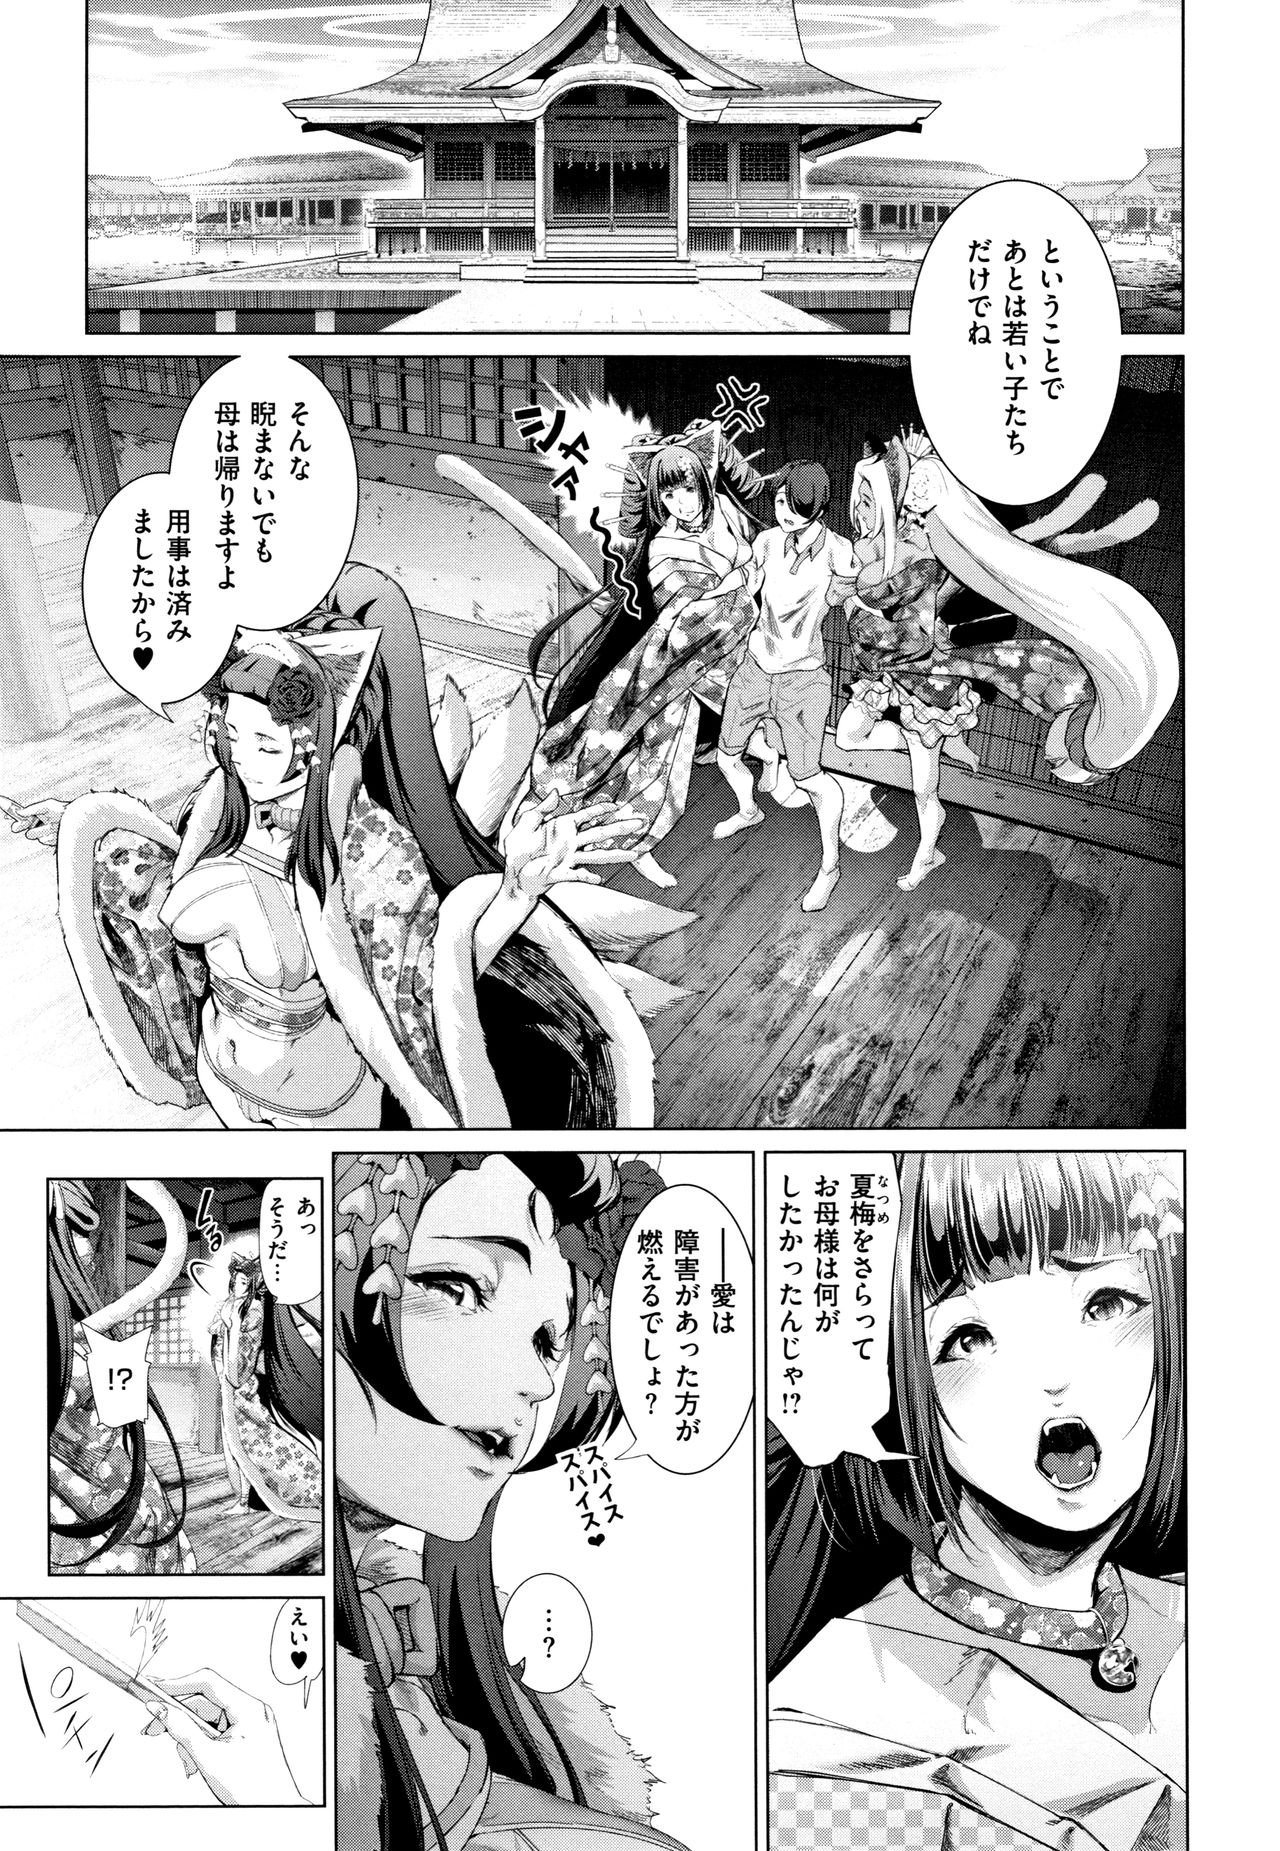 [Suzuhane Suzu] Cos wa Midara na Kamen Shogyouban - Cosplay is a mask [wakes up erotic personality...] 181